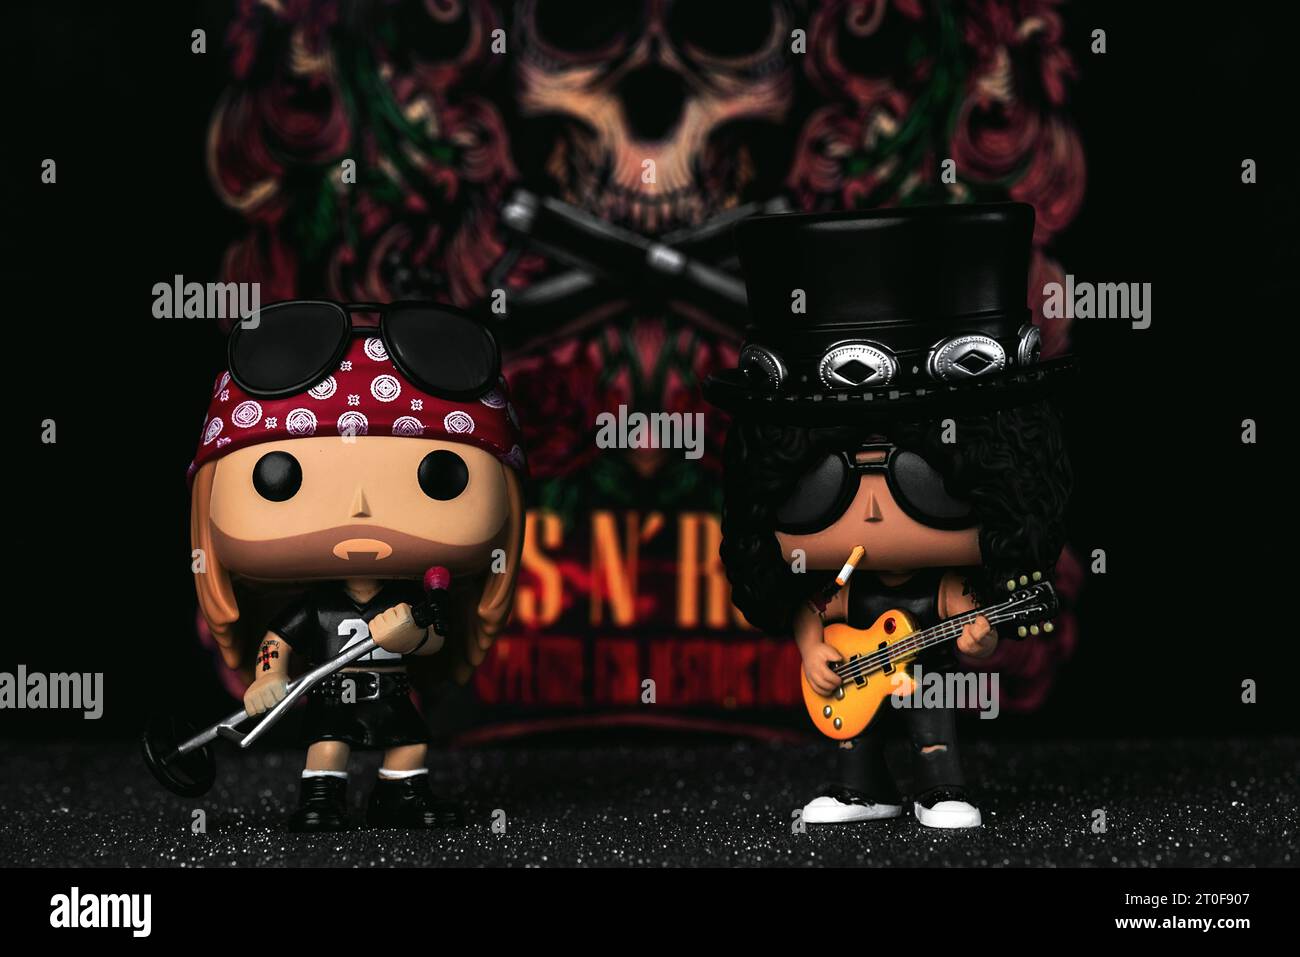 Funko POP in vinile figure di Axl Rose e Slash del gruppo hard rock statunitense Guns N' Roses davanti al poster dei Guns N' Roses. Editoriale illustrativo o Foto Stock